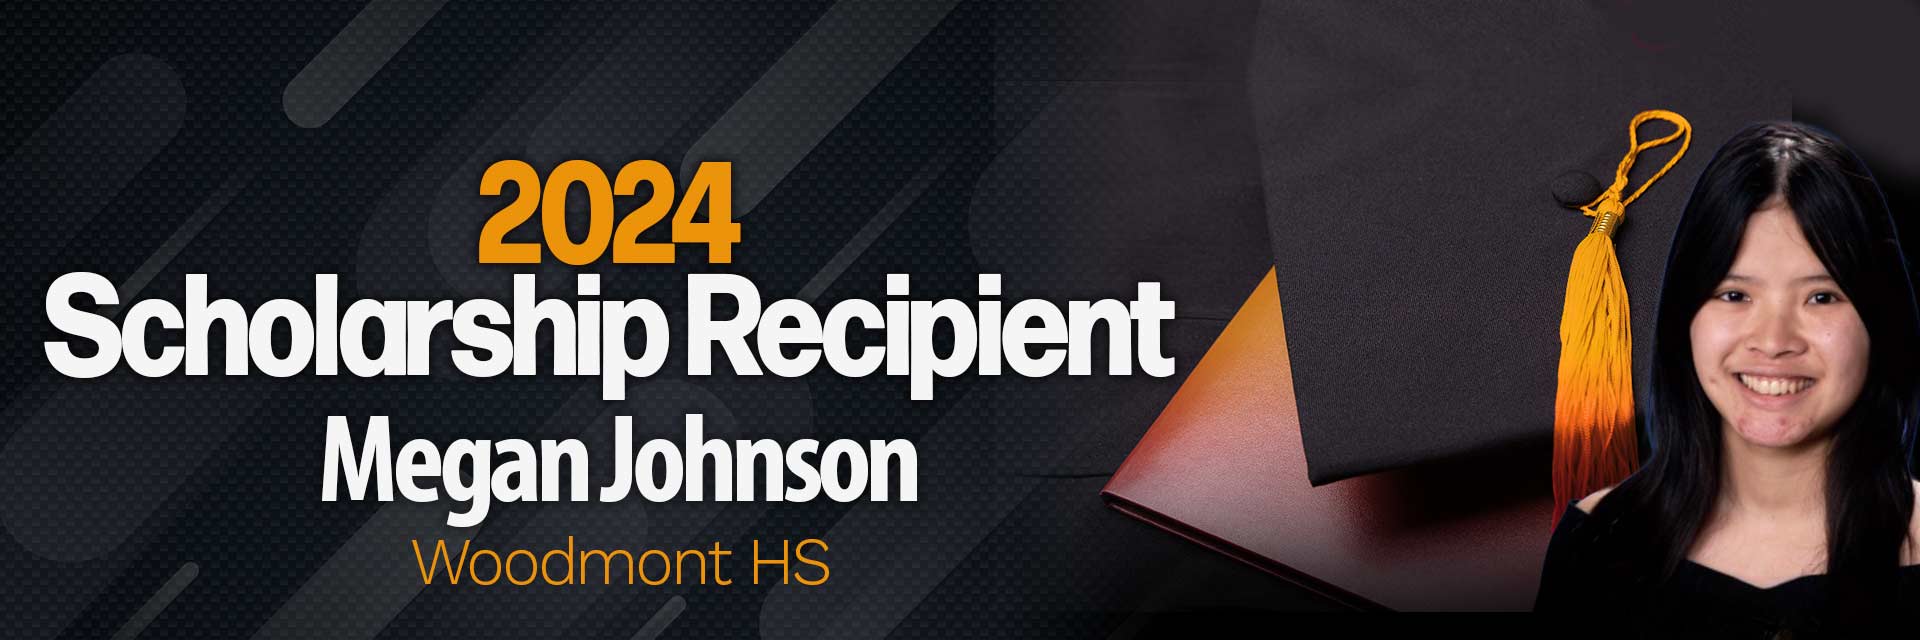 Megan Johnson - 2024 Scholarship Recipient